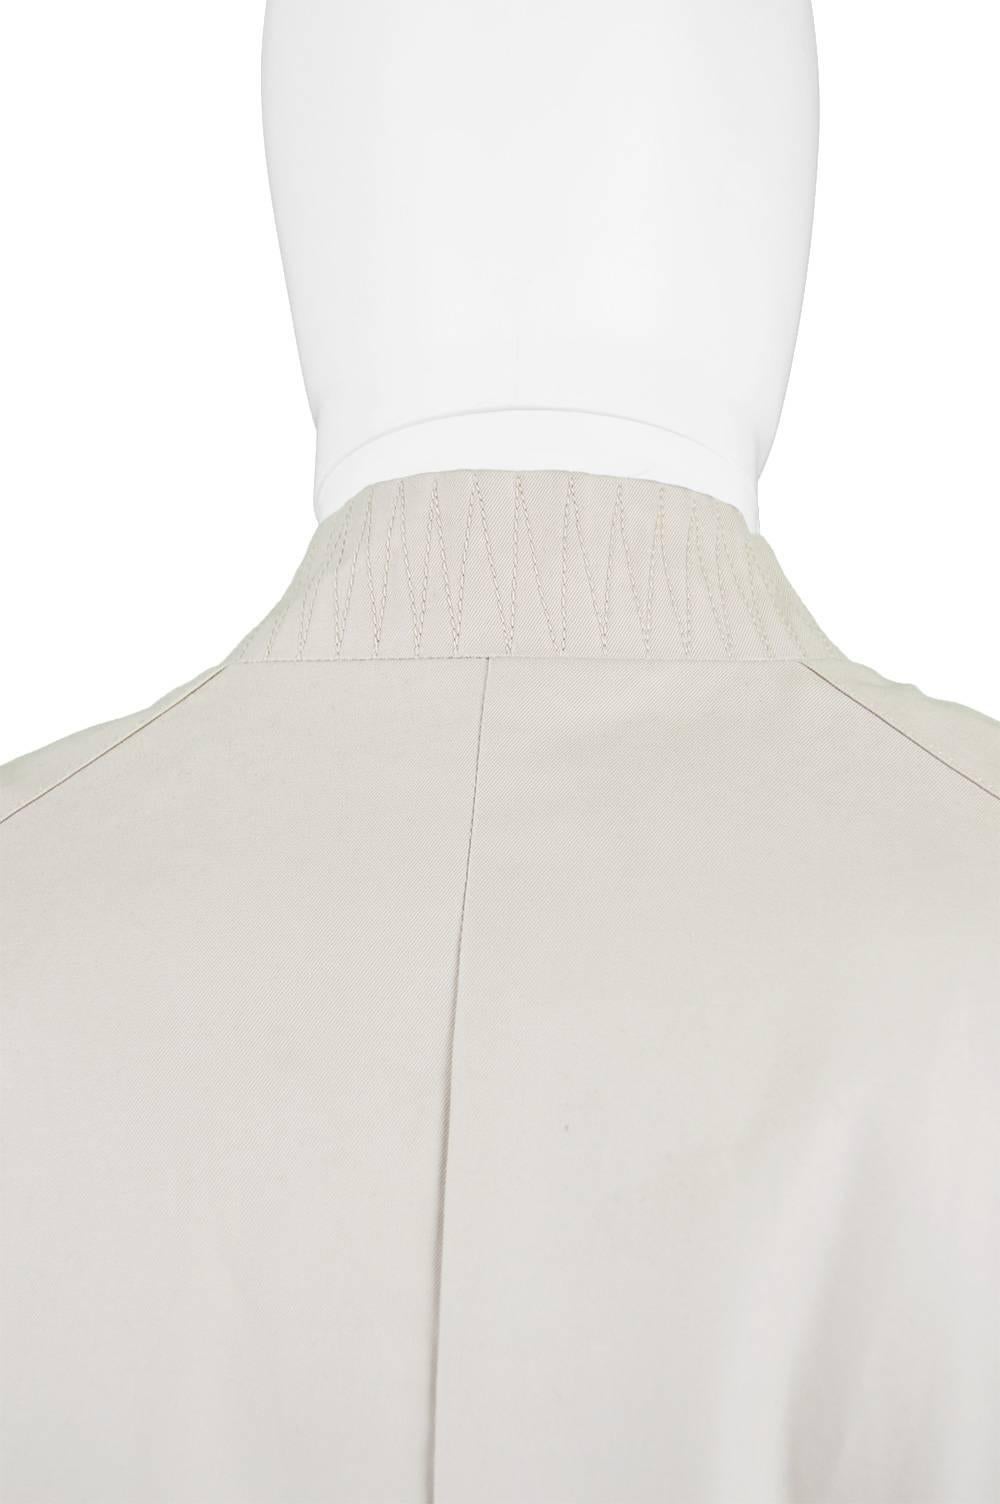 Yves Saint Laurent Men's Beige Cotton Single Breasted YSL Safari Jacket  1